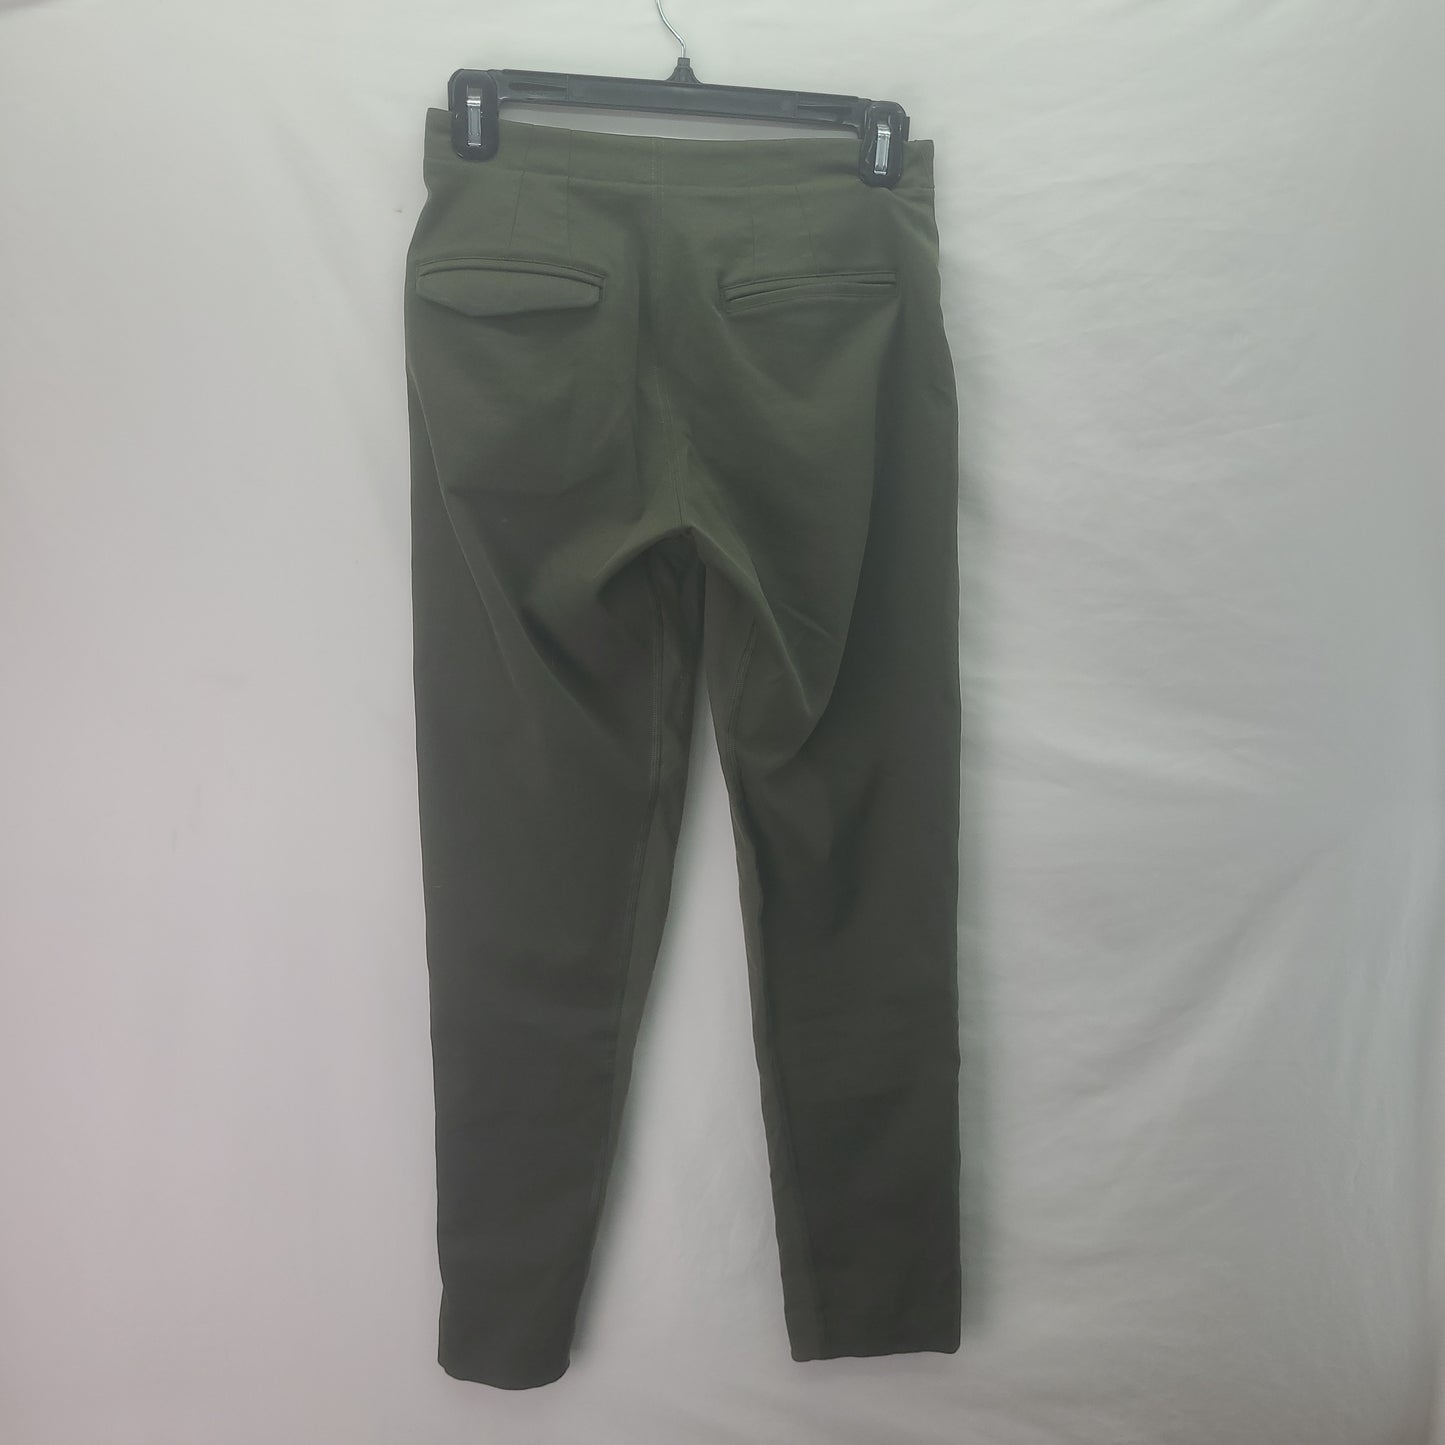 Lululemon Women's Casual Pants Green - Size 2